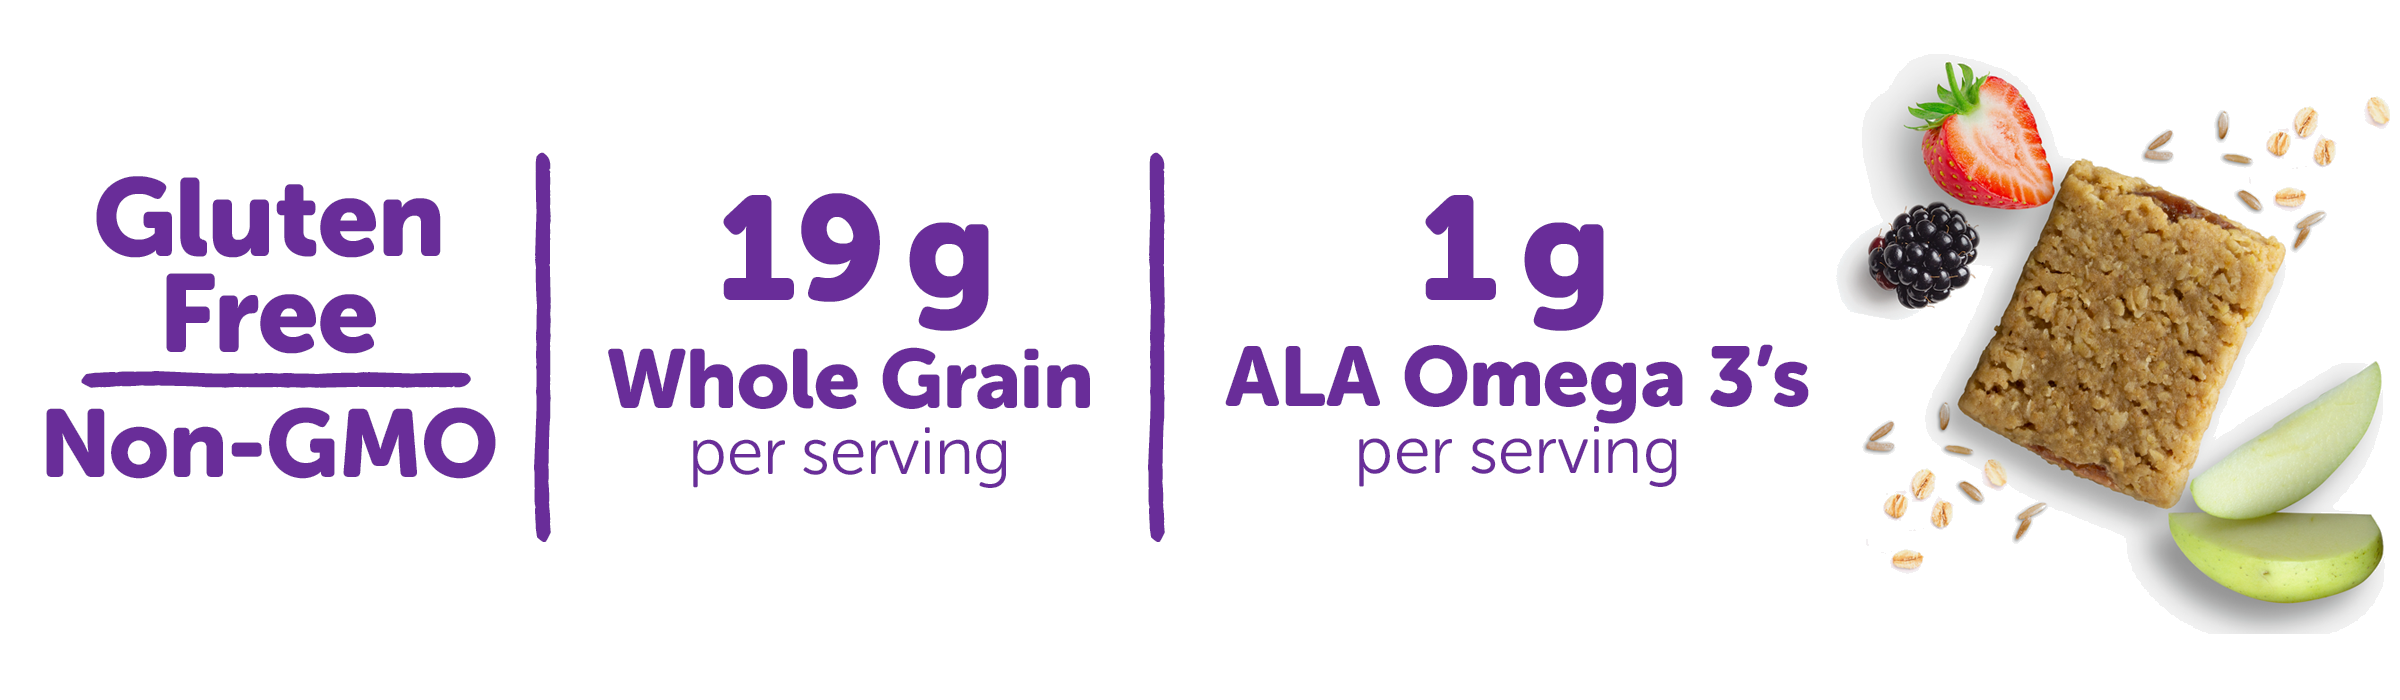 Gluten Free / 19g Whole Grain per serving / 1 g ALA Omega 3's per serving